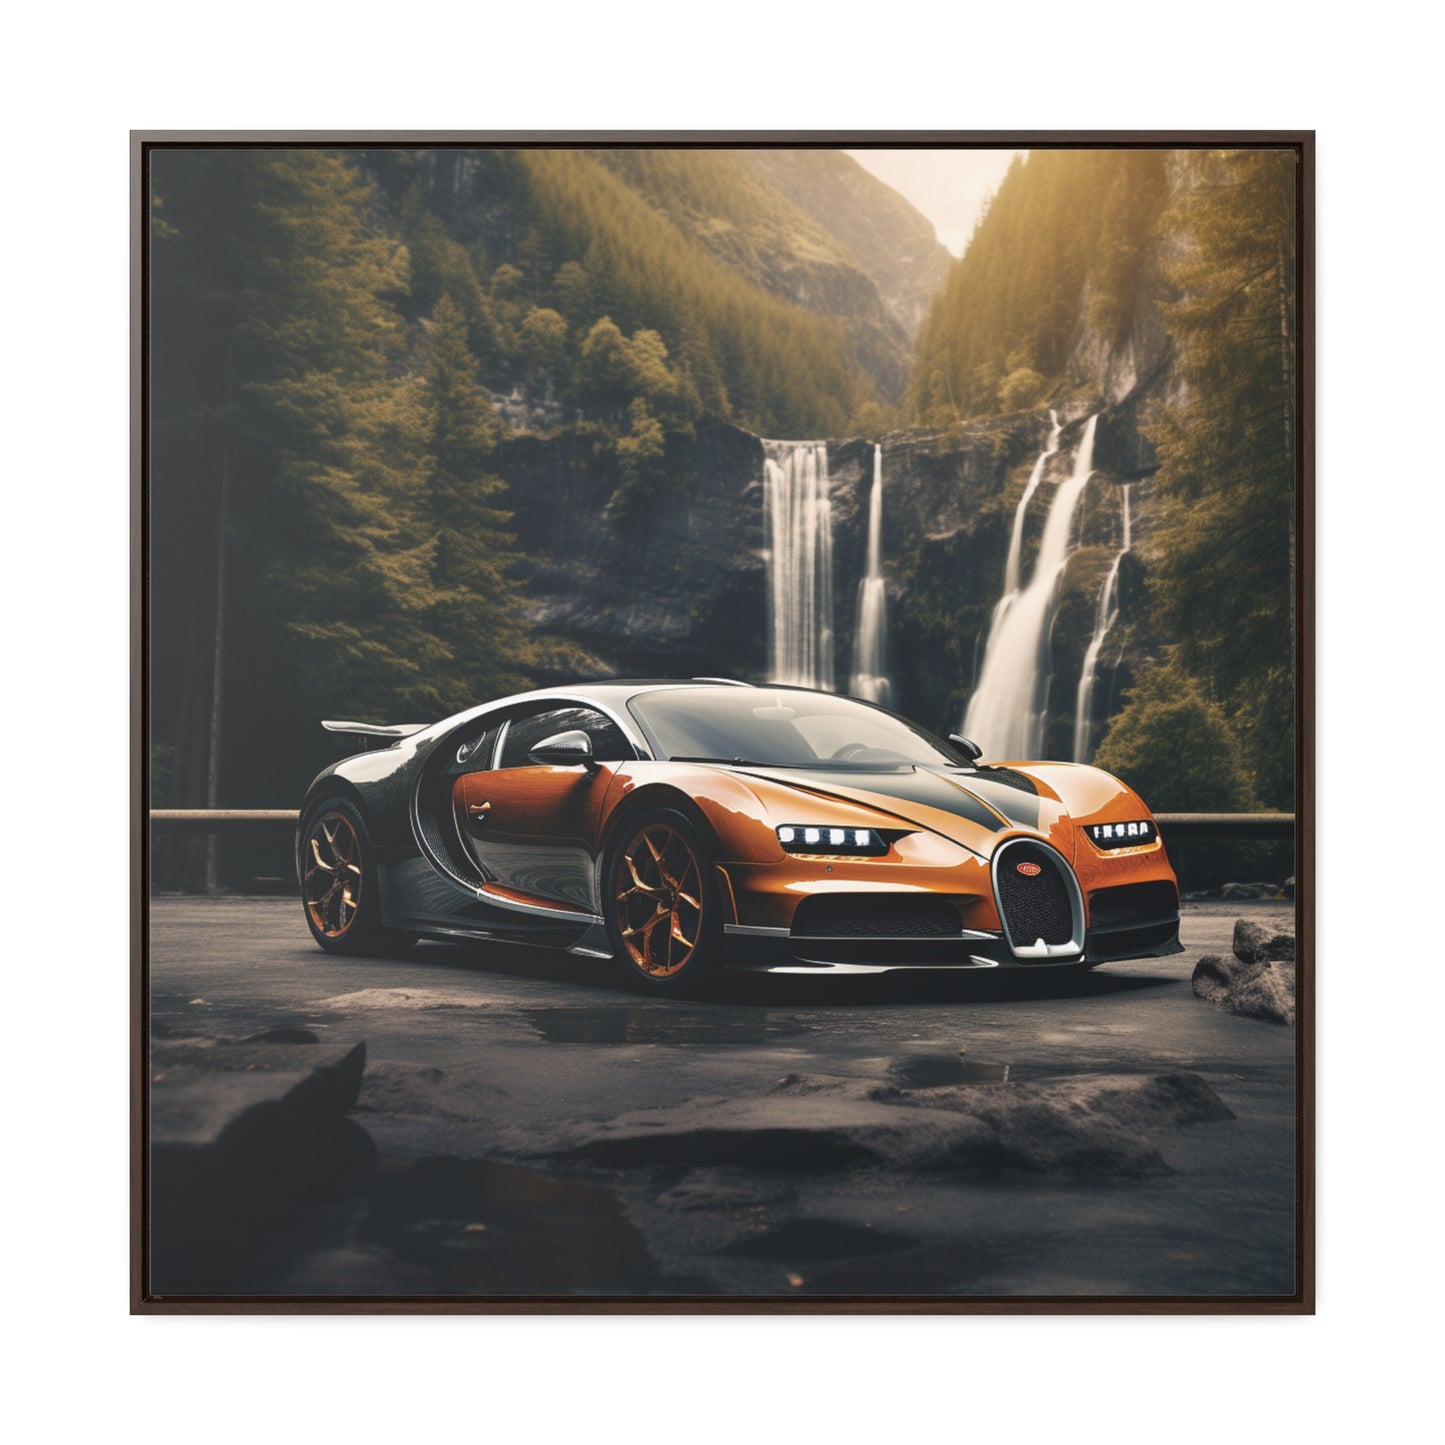 Gallery Canvas Wraps, Square Frame Bugatti Waterfall 3